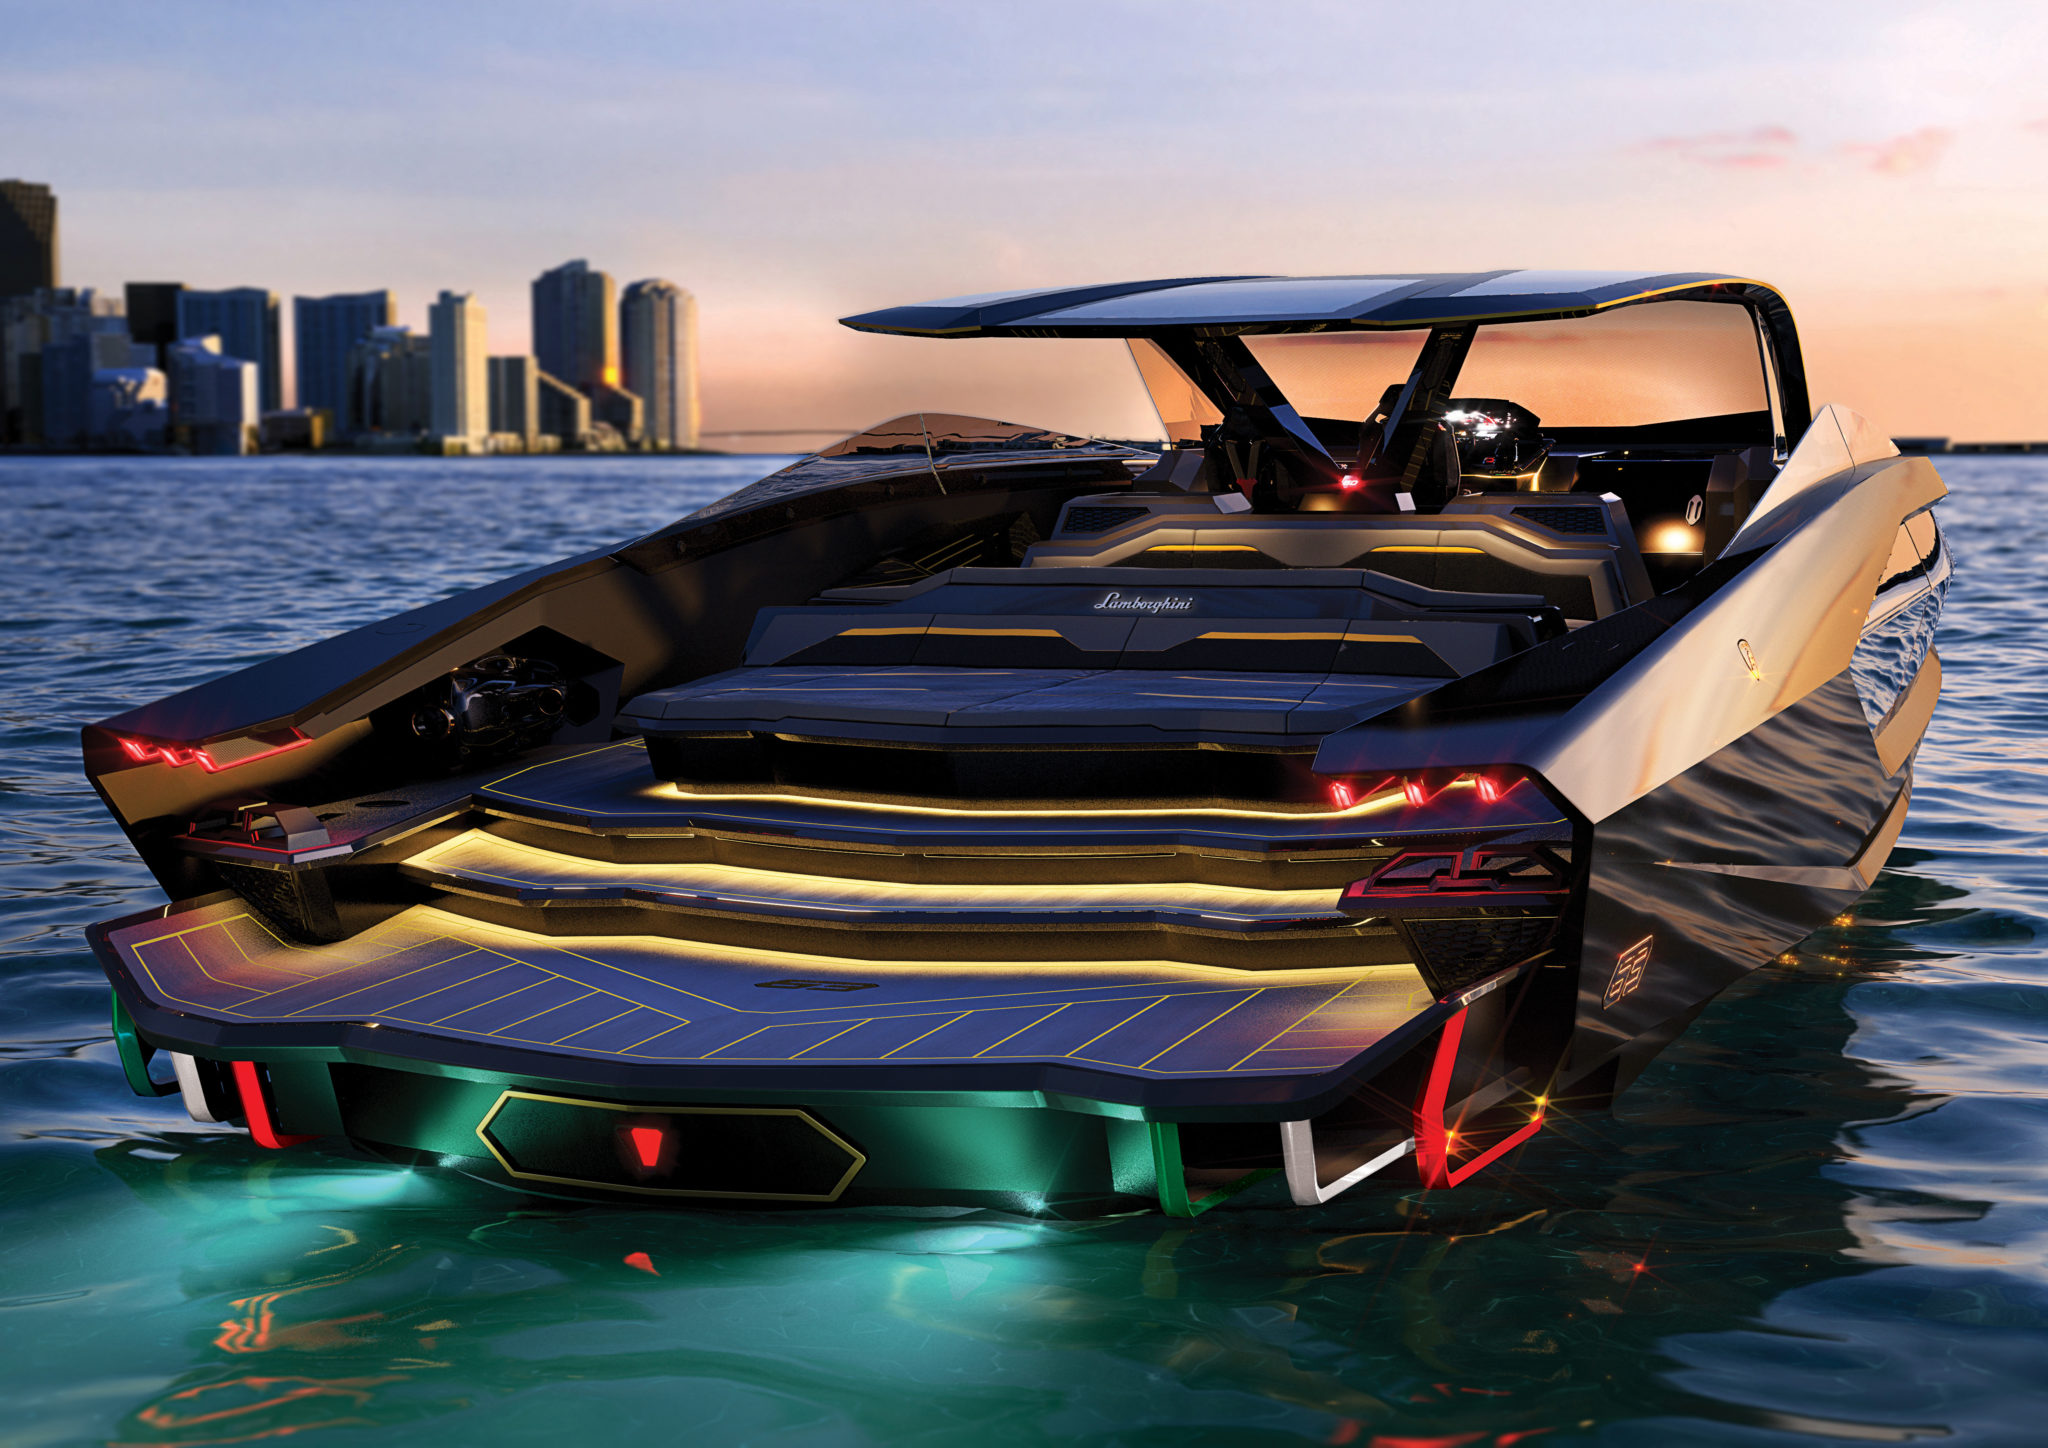 Conor McGregor's $4 Million Dollar Lamborghini Yacht